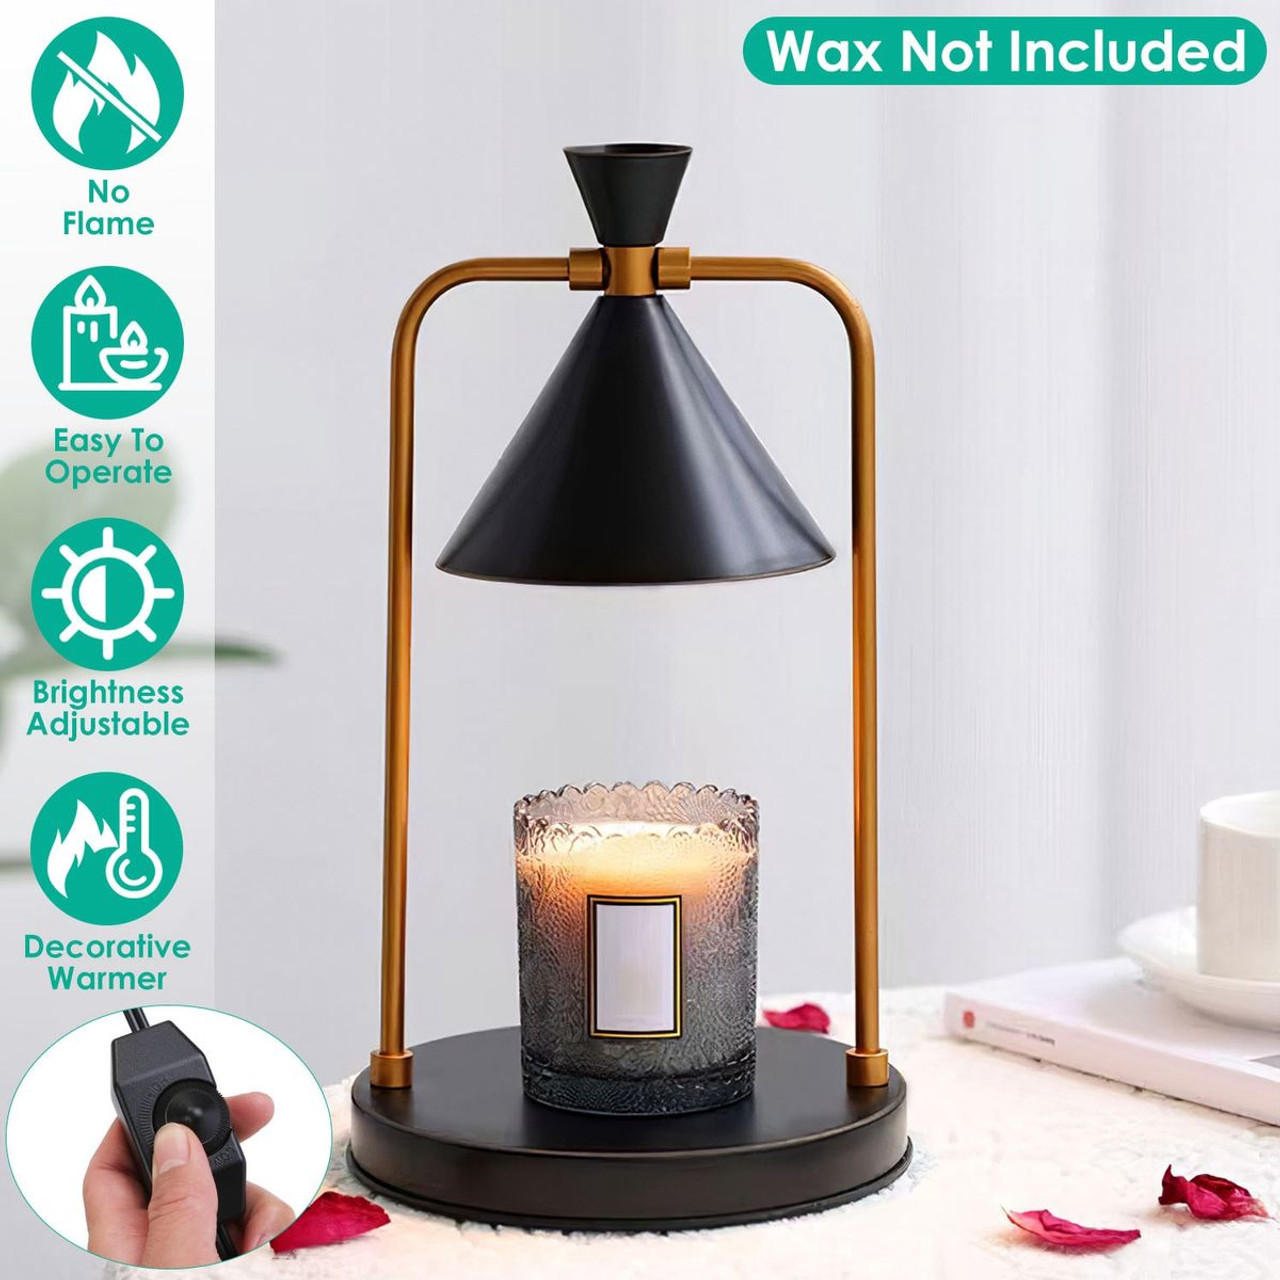 iMounTEK® Dimmable Wax Warmer Lamp product image